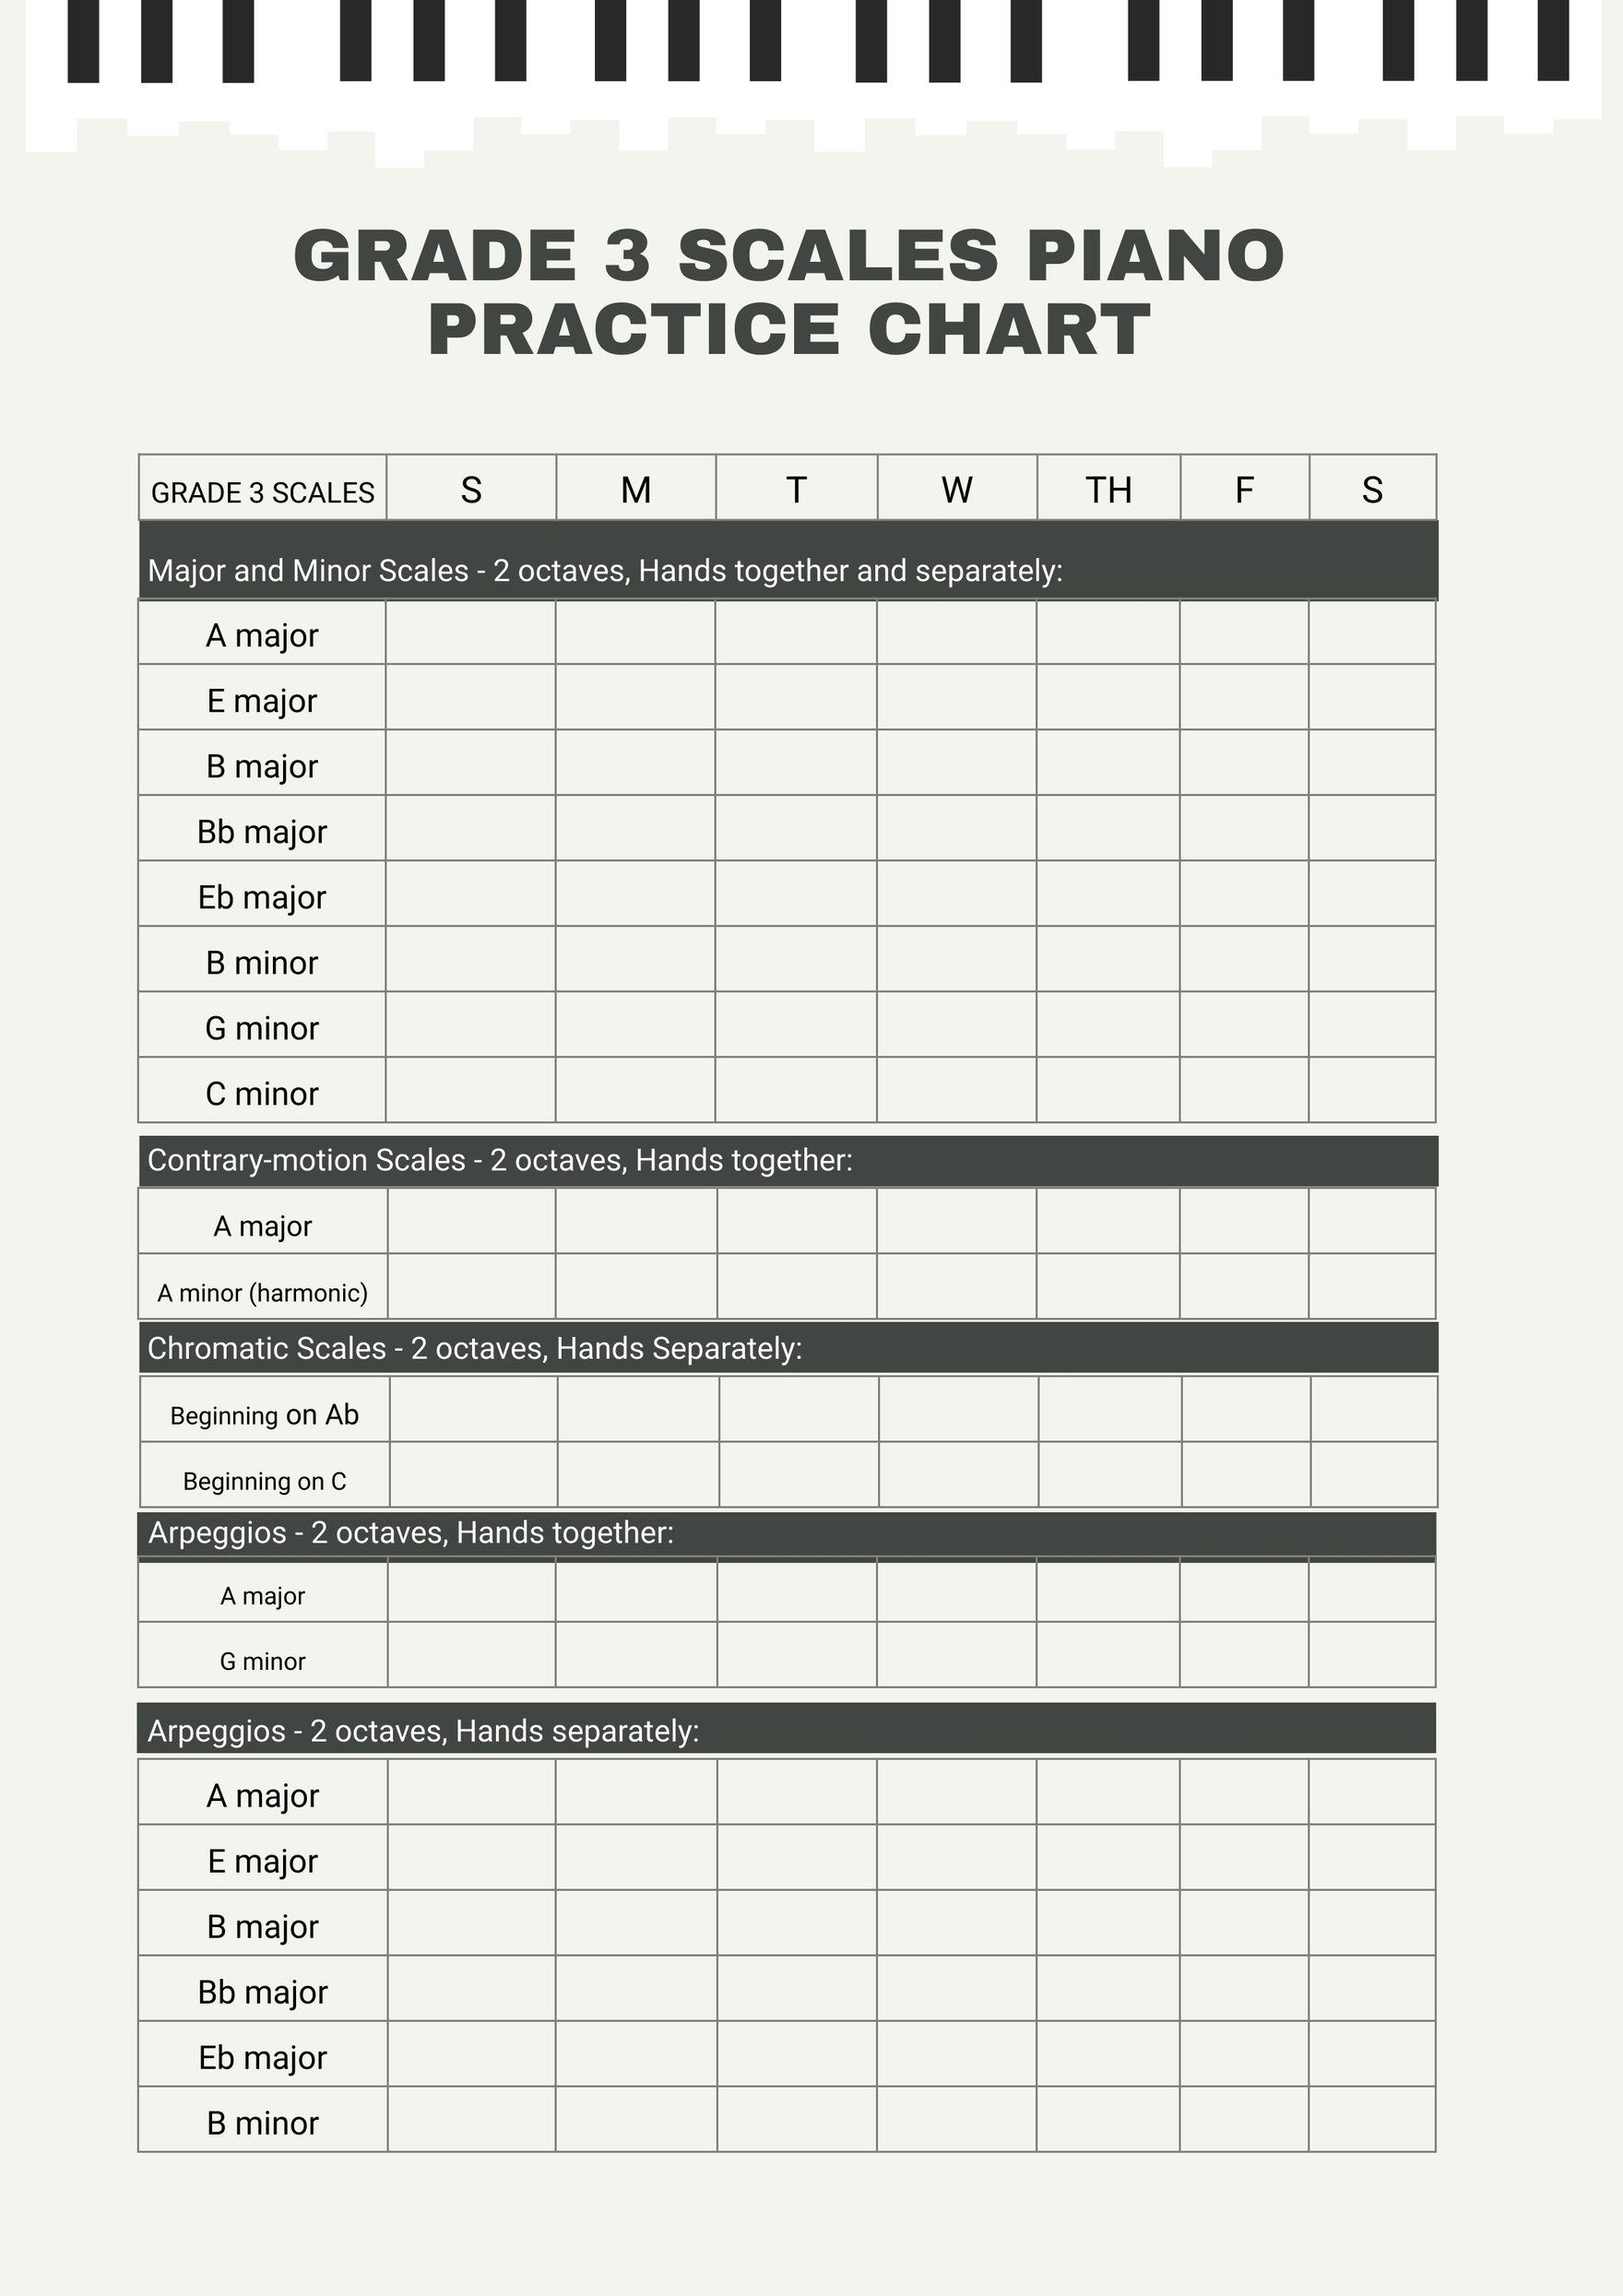 scales-practice-chart